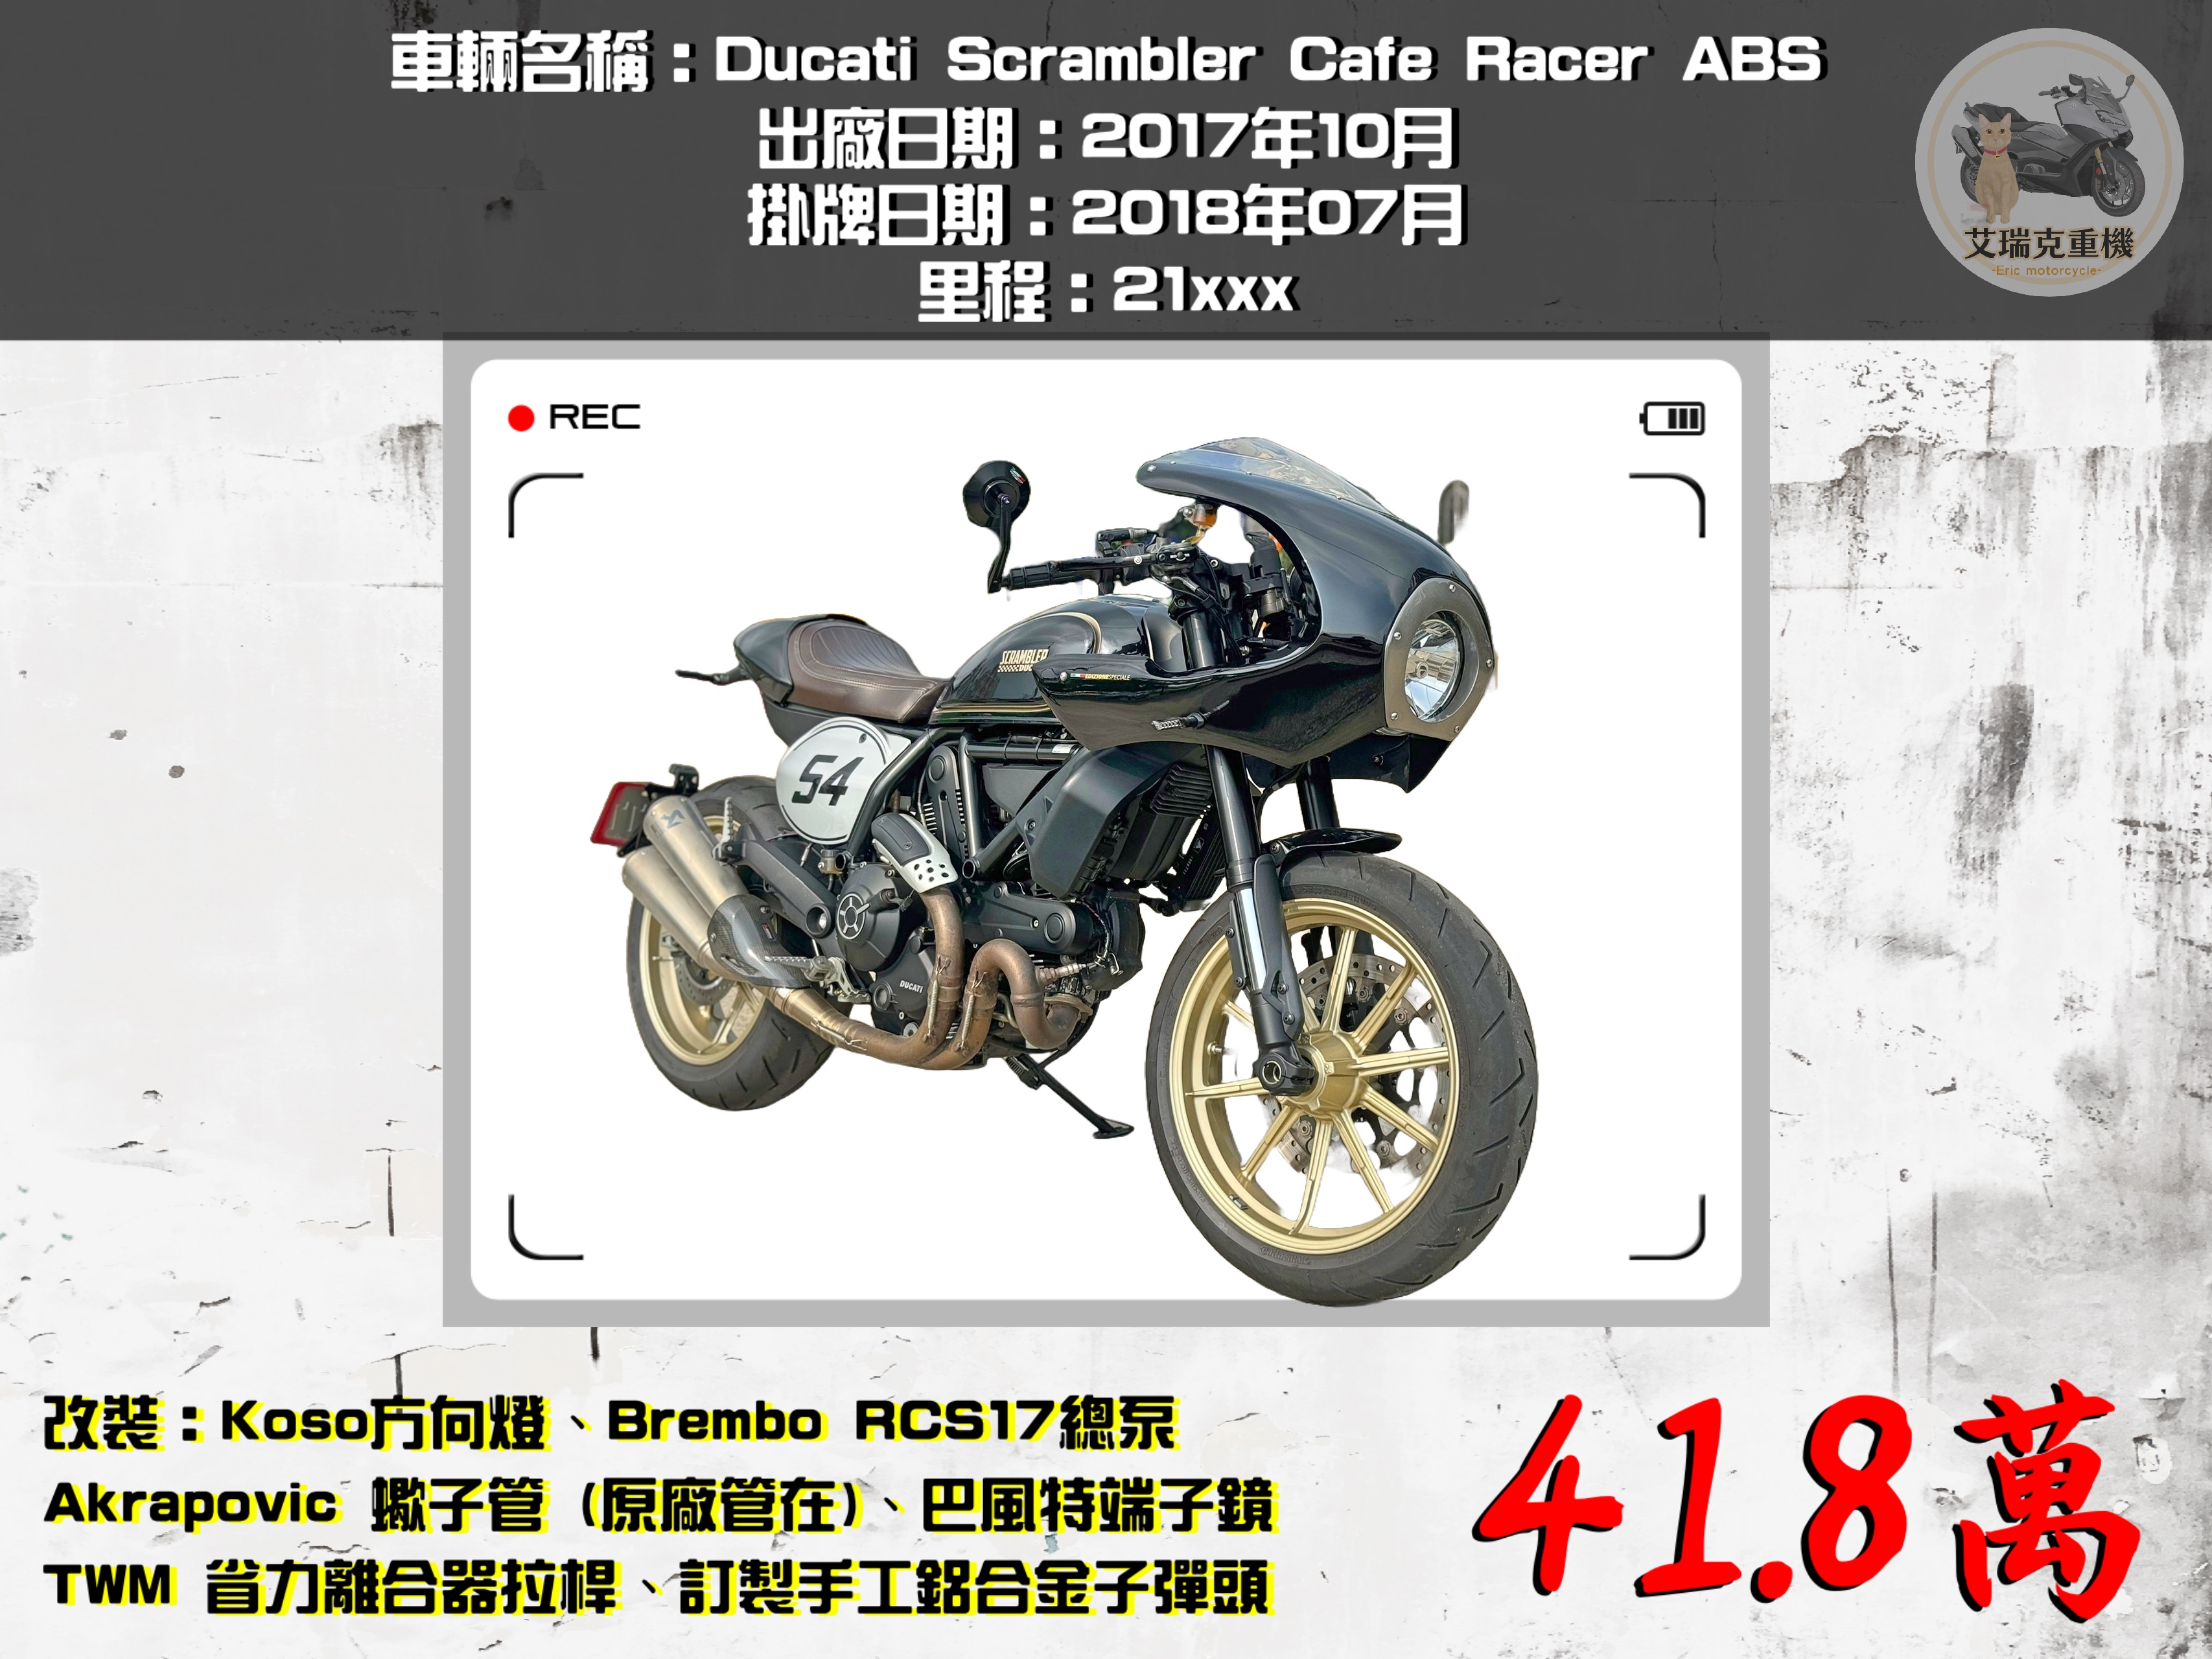 【艾瑞克重機】DUCATI SCRAMBLER CAFE RACER - 「Webike-摩托車市」 Ducati Scrambler Cafe Racer ABS